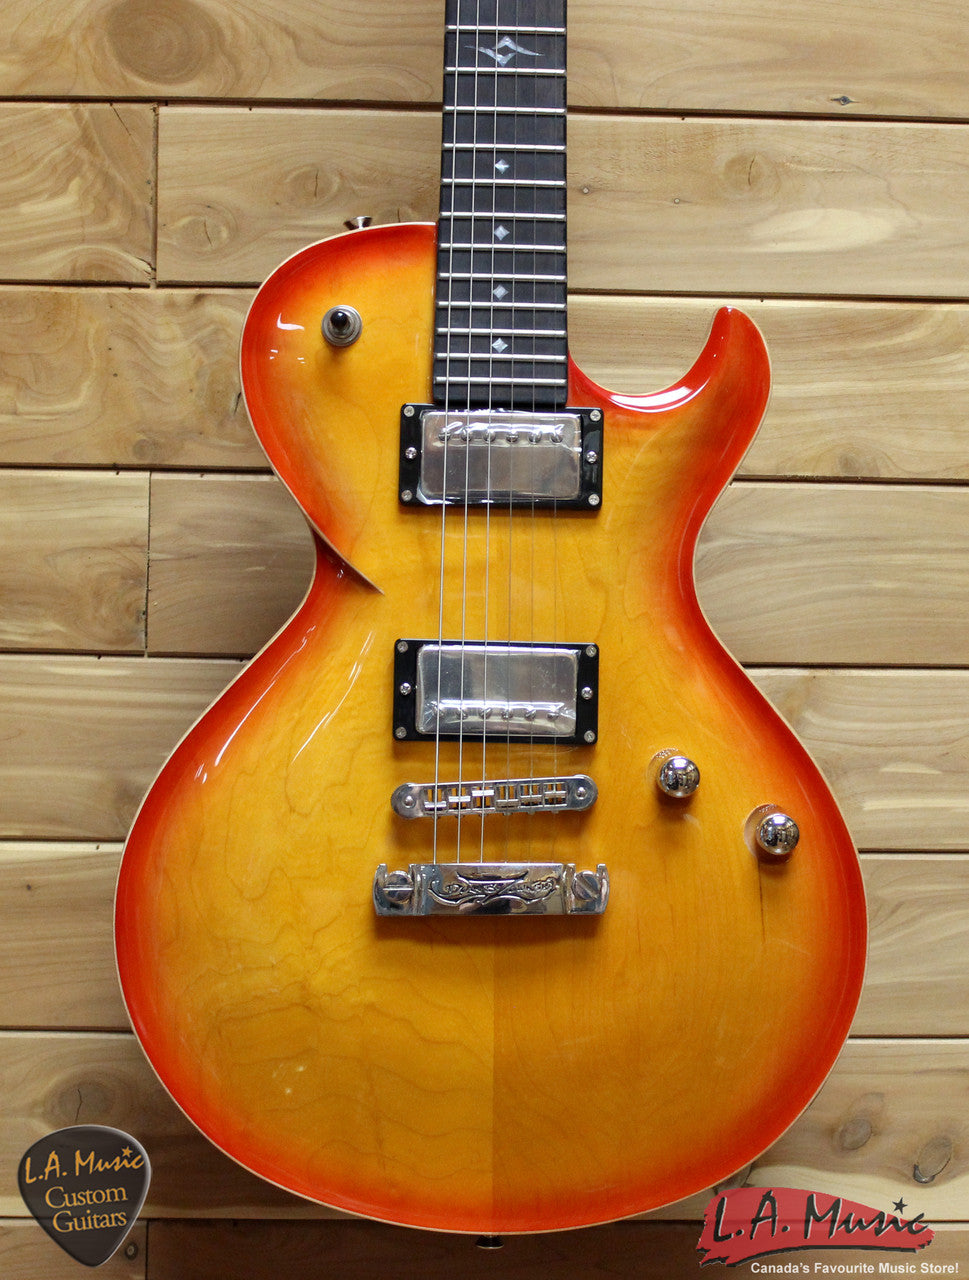 DBZ Bolero Guitar Plain Top Cherry Sunburst Made in China - L.A. Music - Canada's Favourite Music Store!